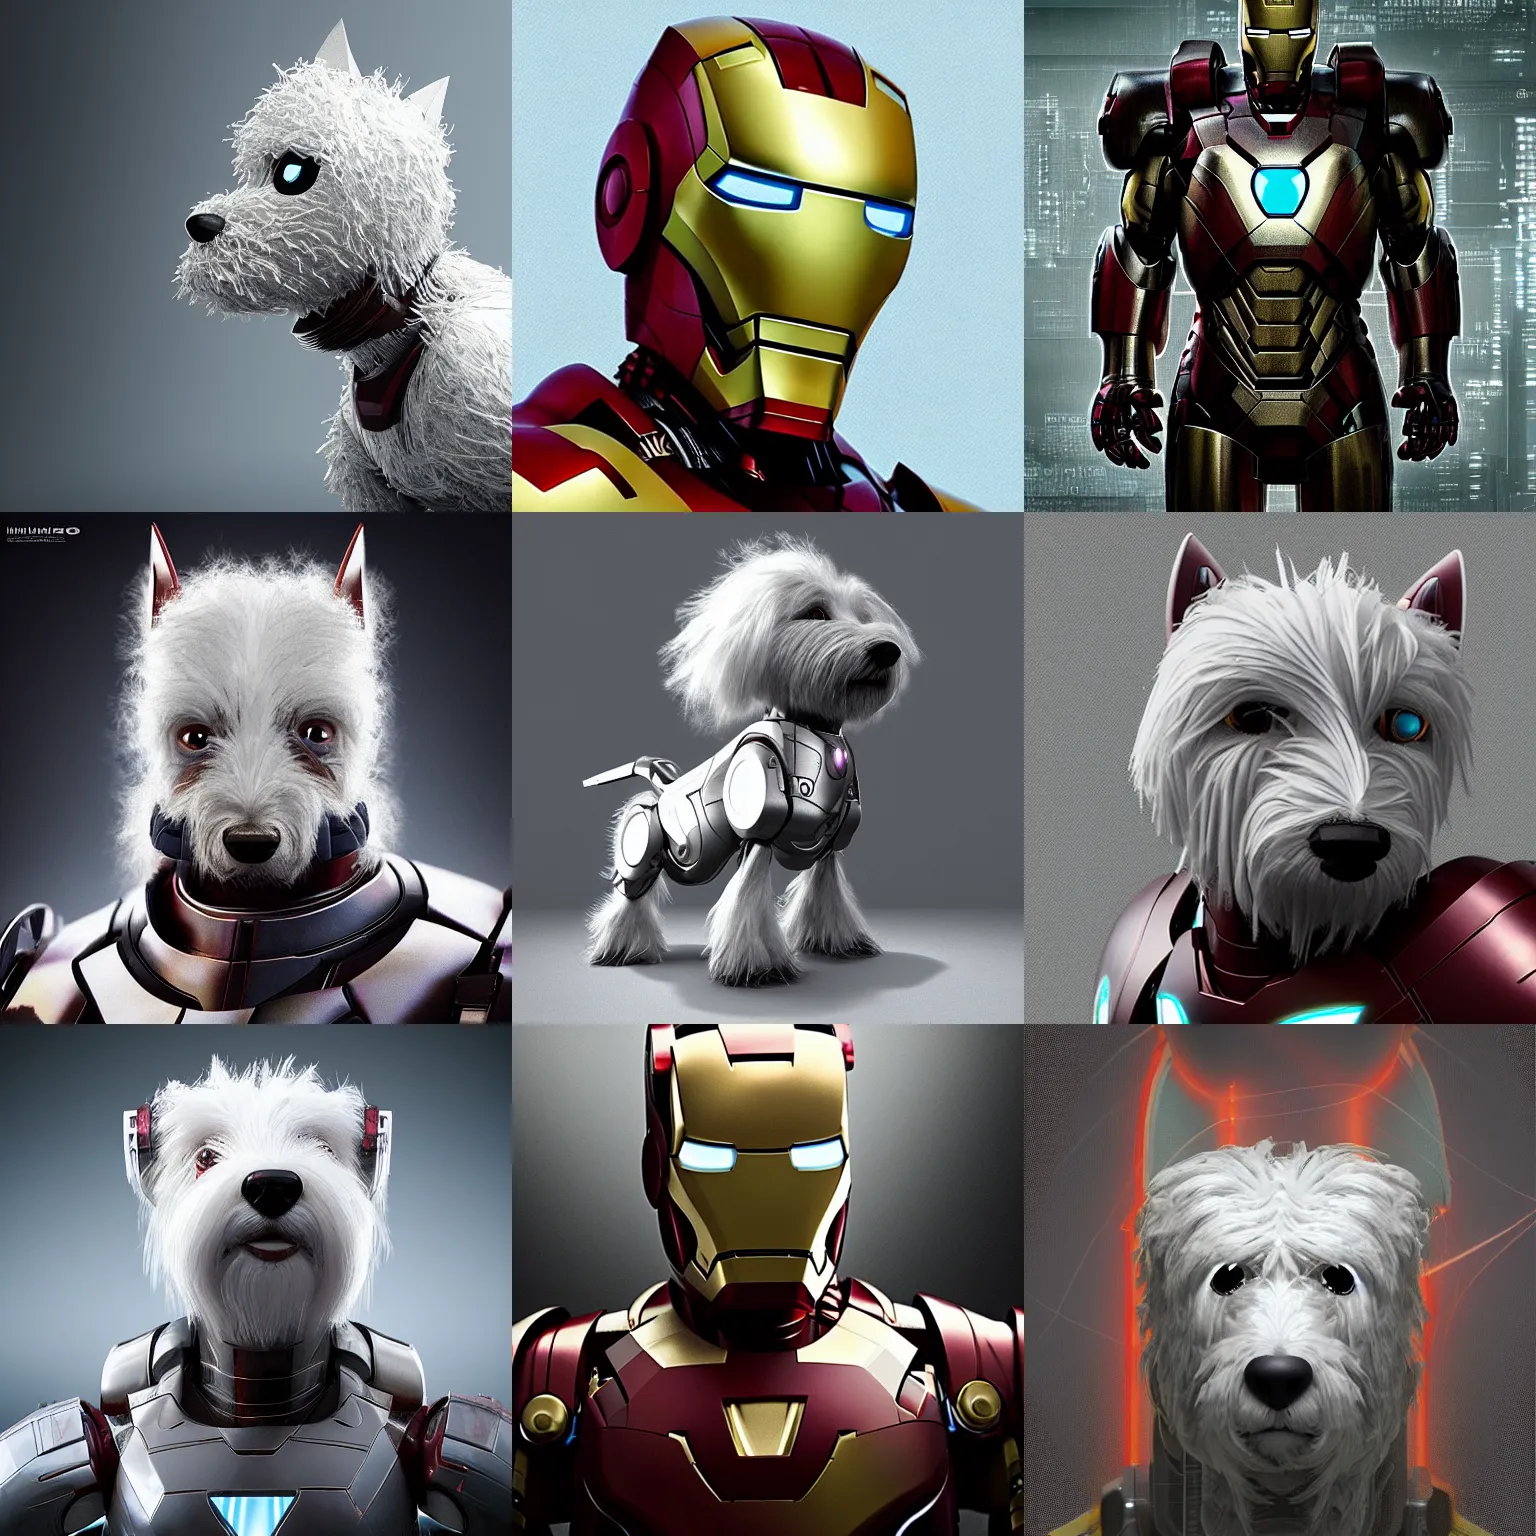 Prompt: “anthropomorphic west-highland-white-terrier iron man, UHD, hyperrealistic render, 4k, cyberpunk”